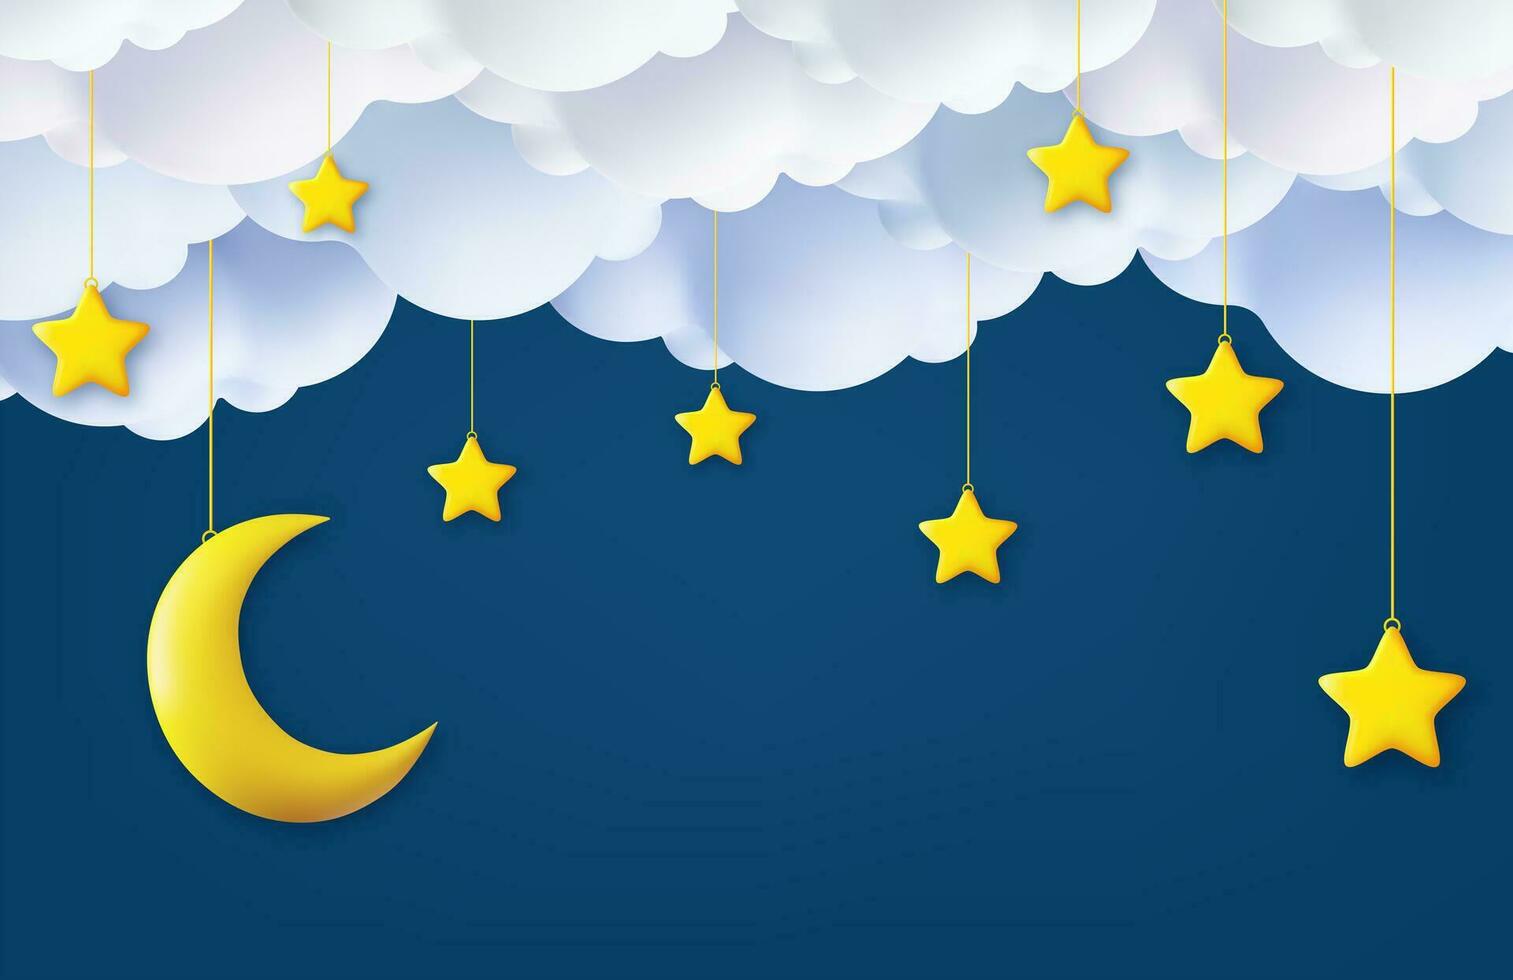 3d Ramadán kareem horizontal rebaja encabezamiento o vale modelo con oro luna, nubes y estrellas en noche cielo azul fondo.lugar para texto. 3d representación. vector ilustración